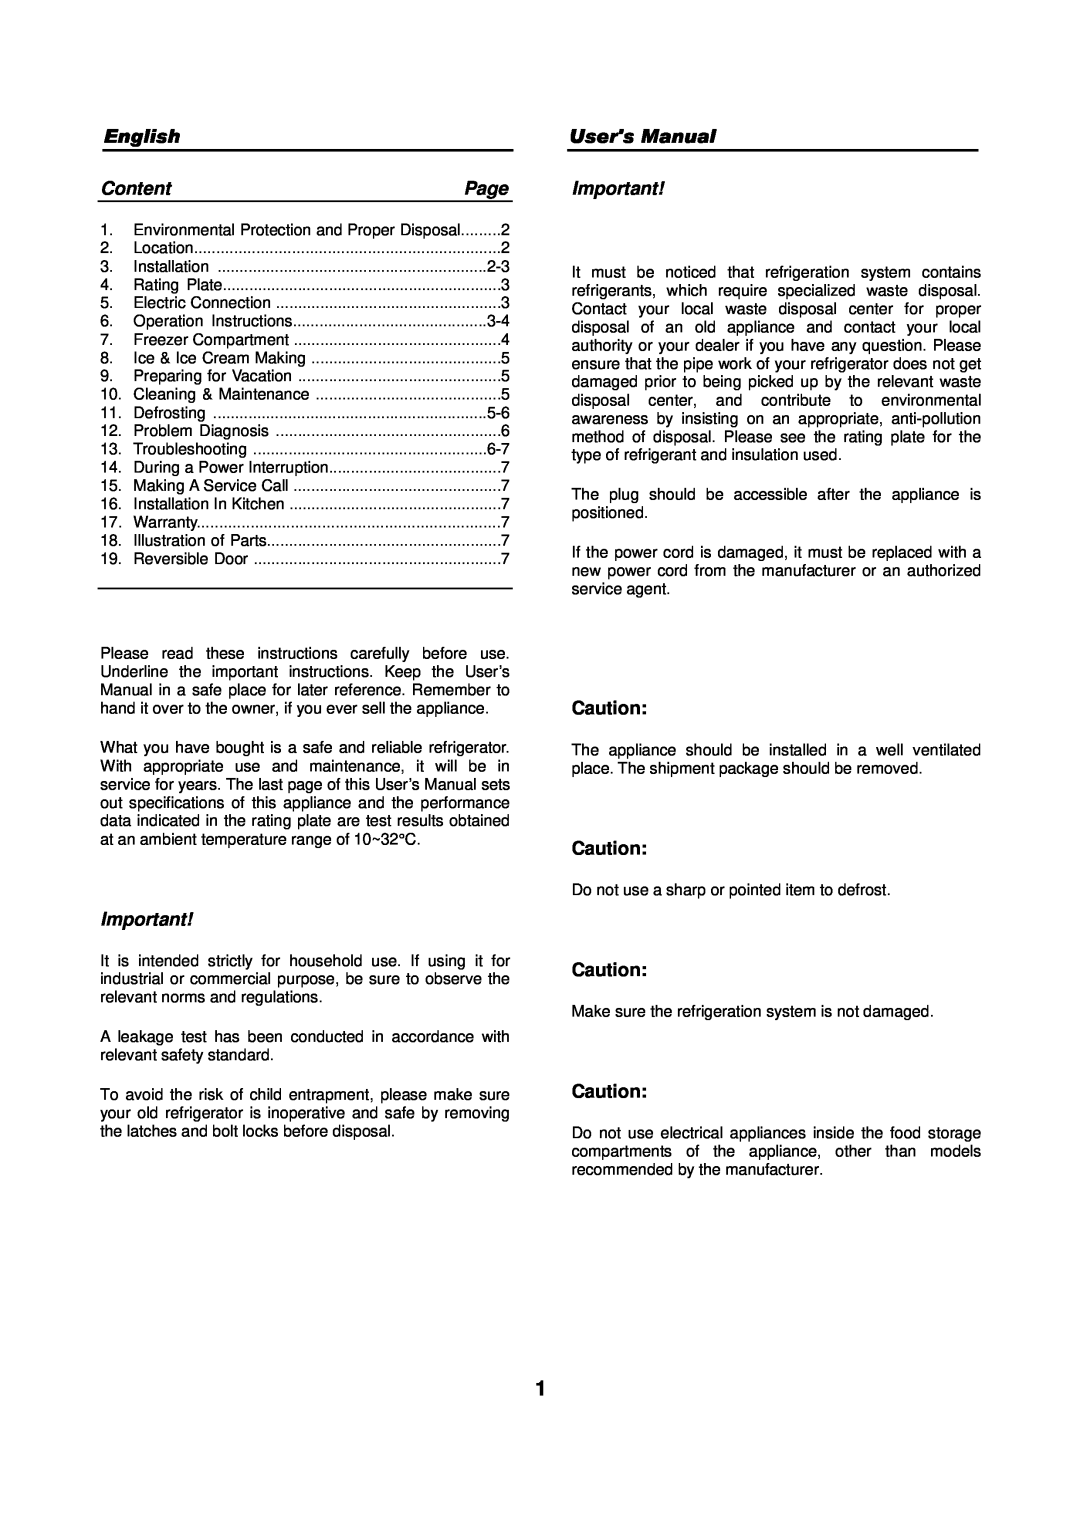 Haier HFN-136, HFN-248 manual Content, Page 